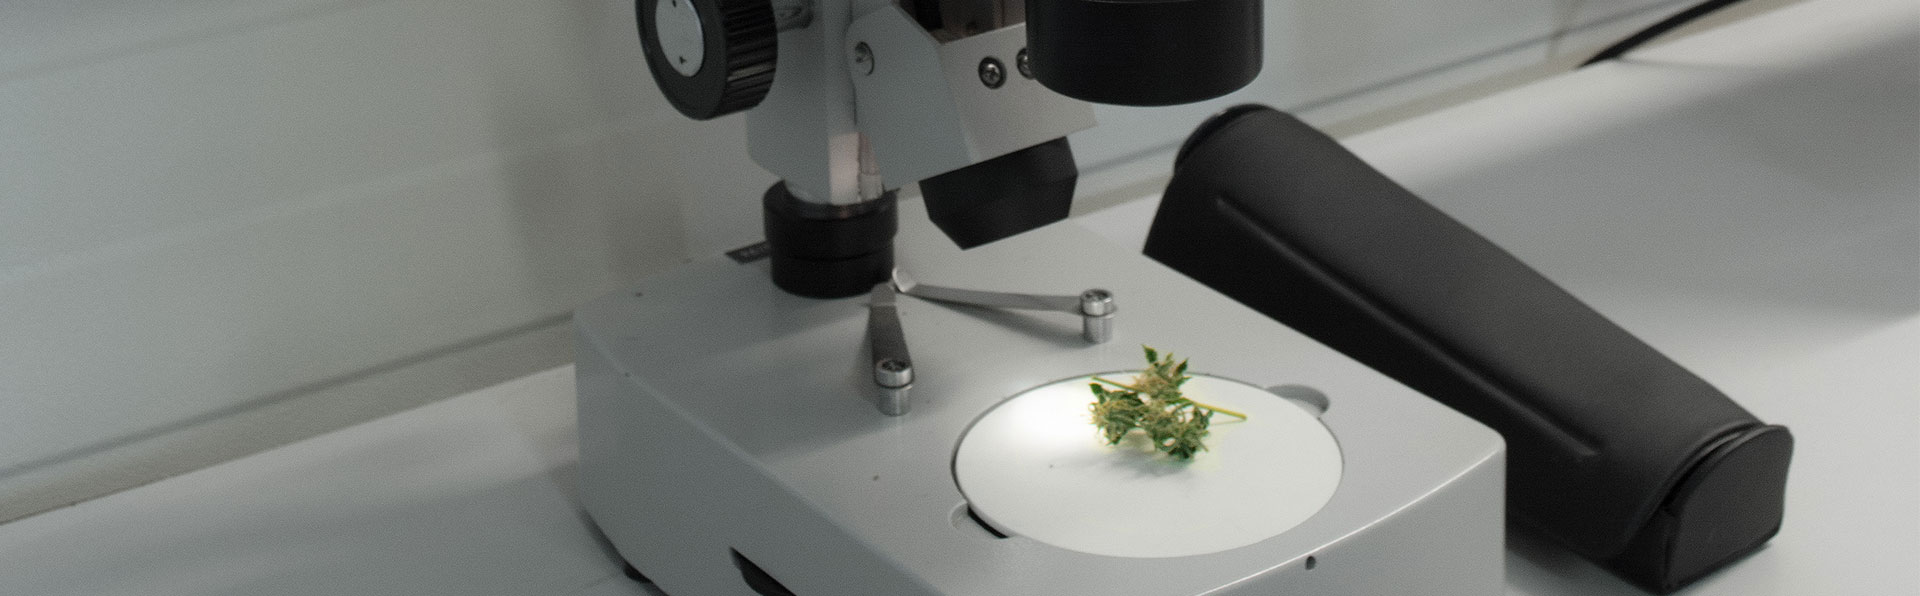 Cannabis under a microscope